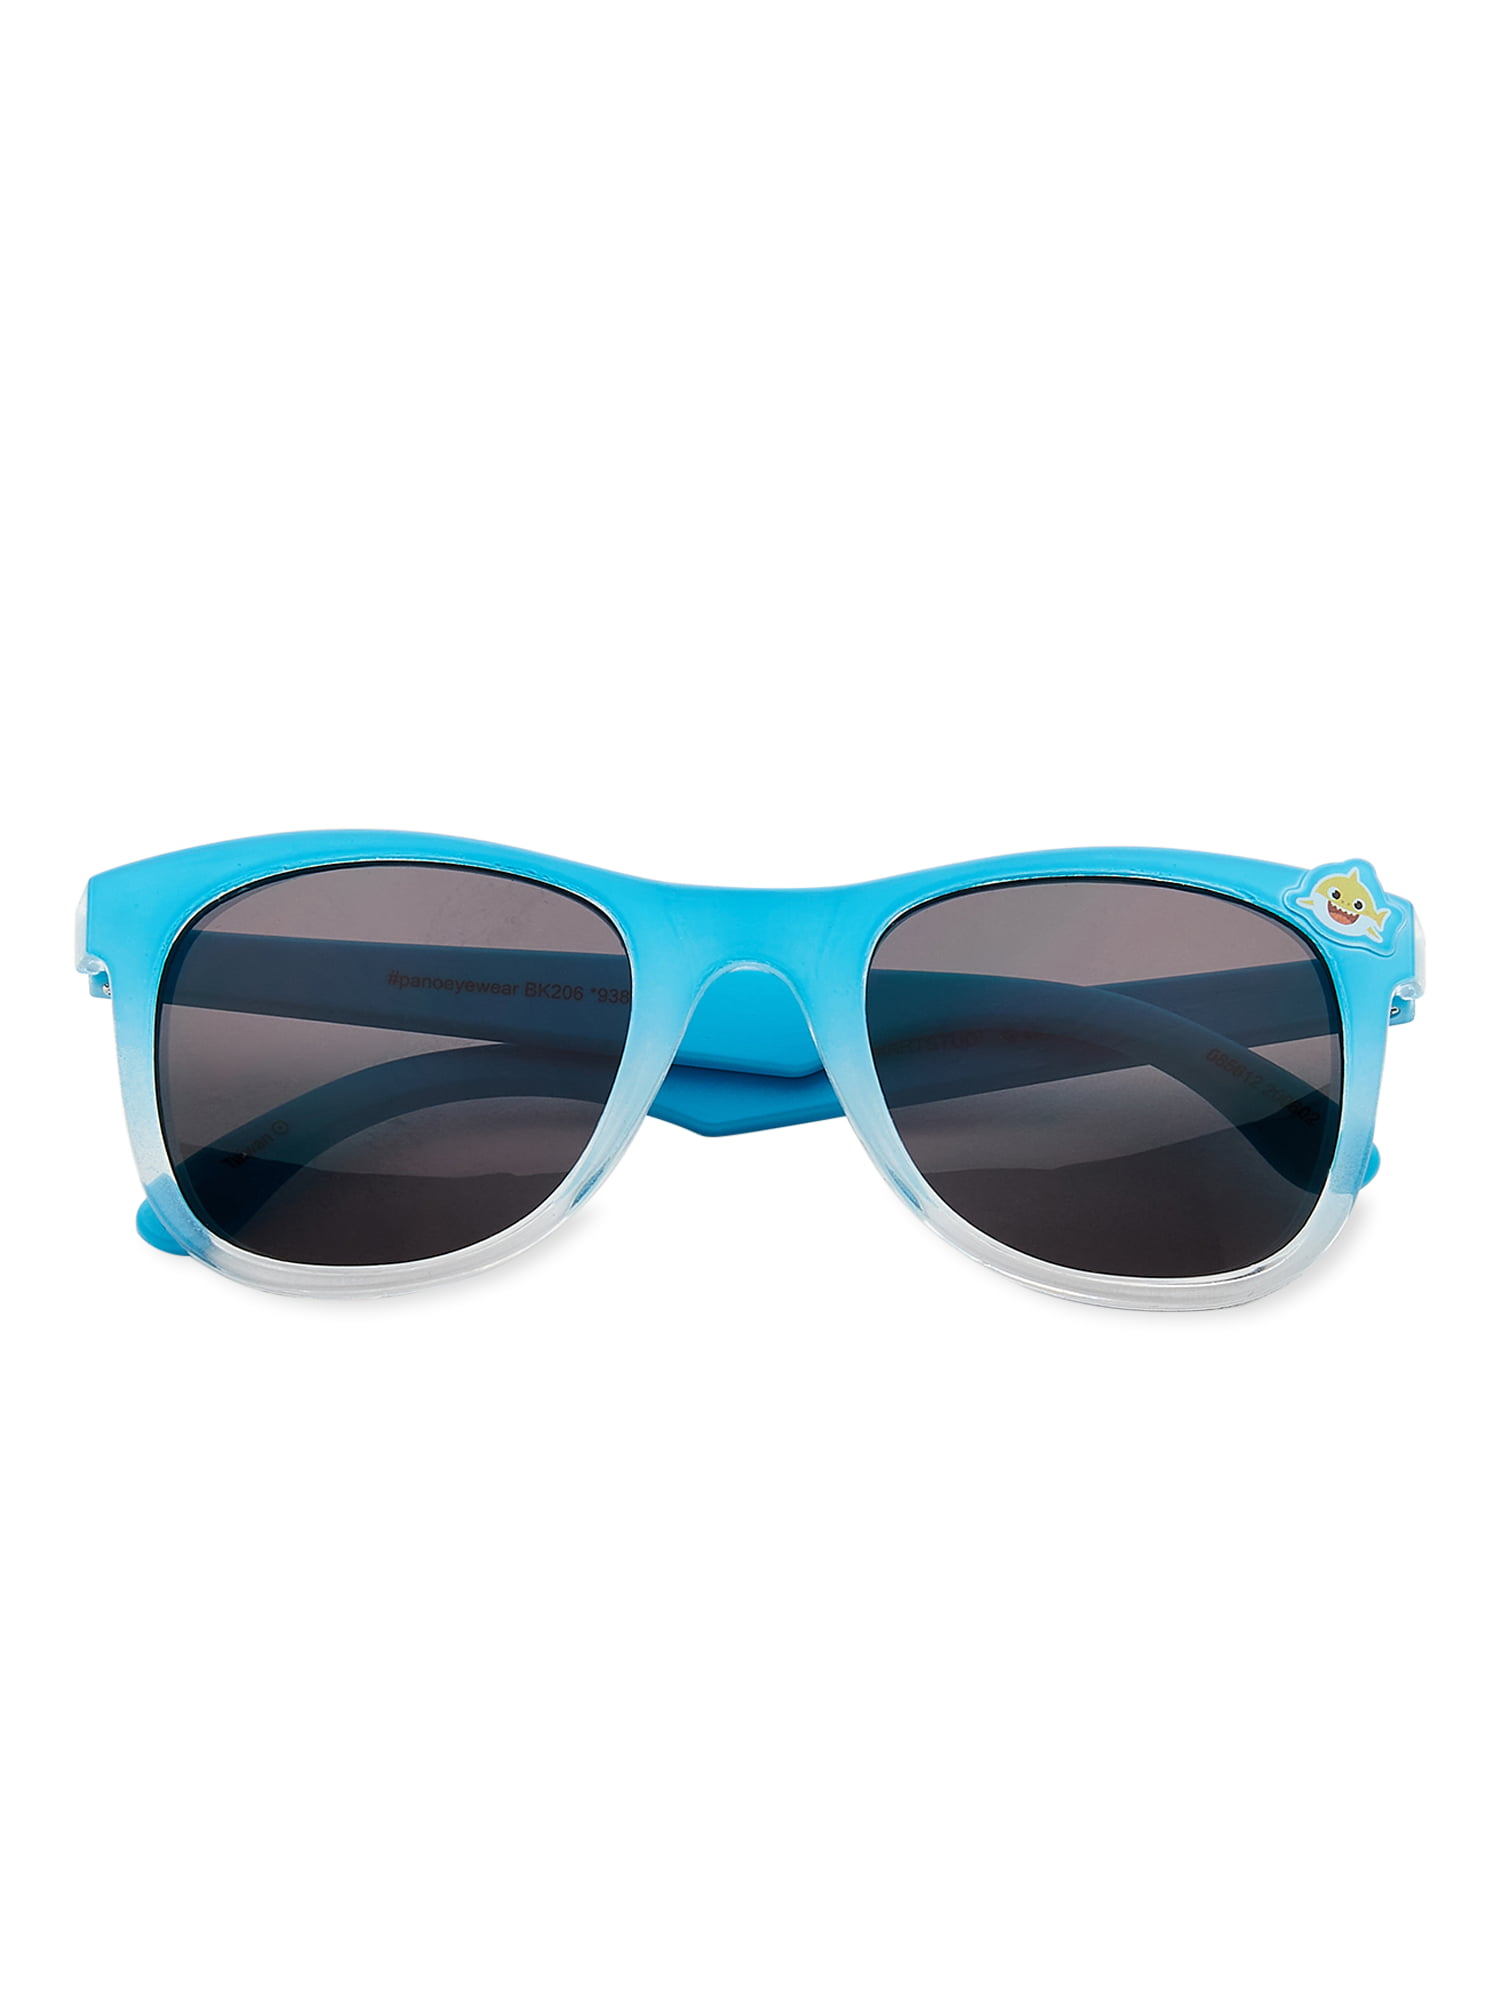 CERDA Boys and Girls Baby Shark Sunglasses Blue One Size 4-10 Years 